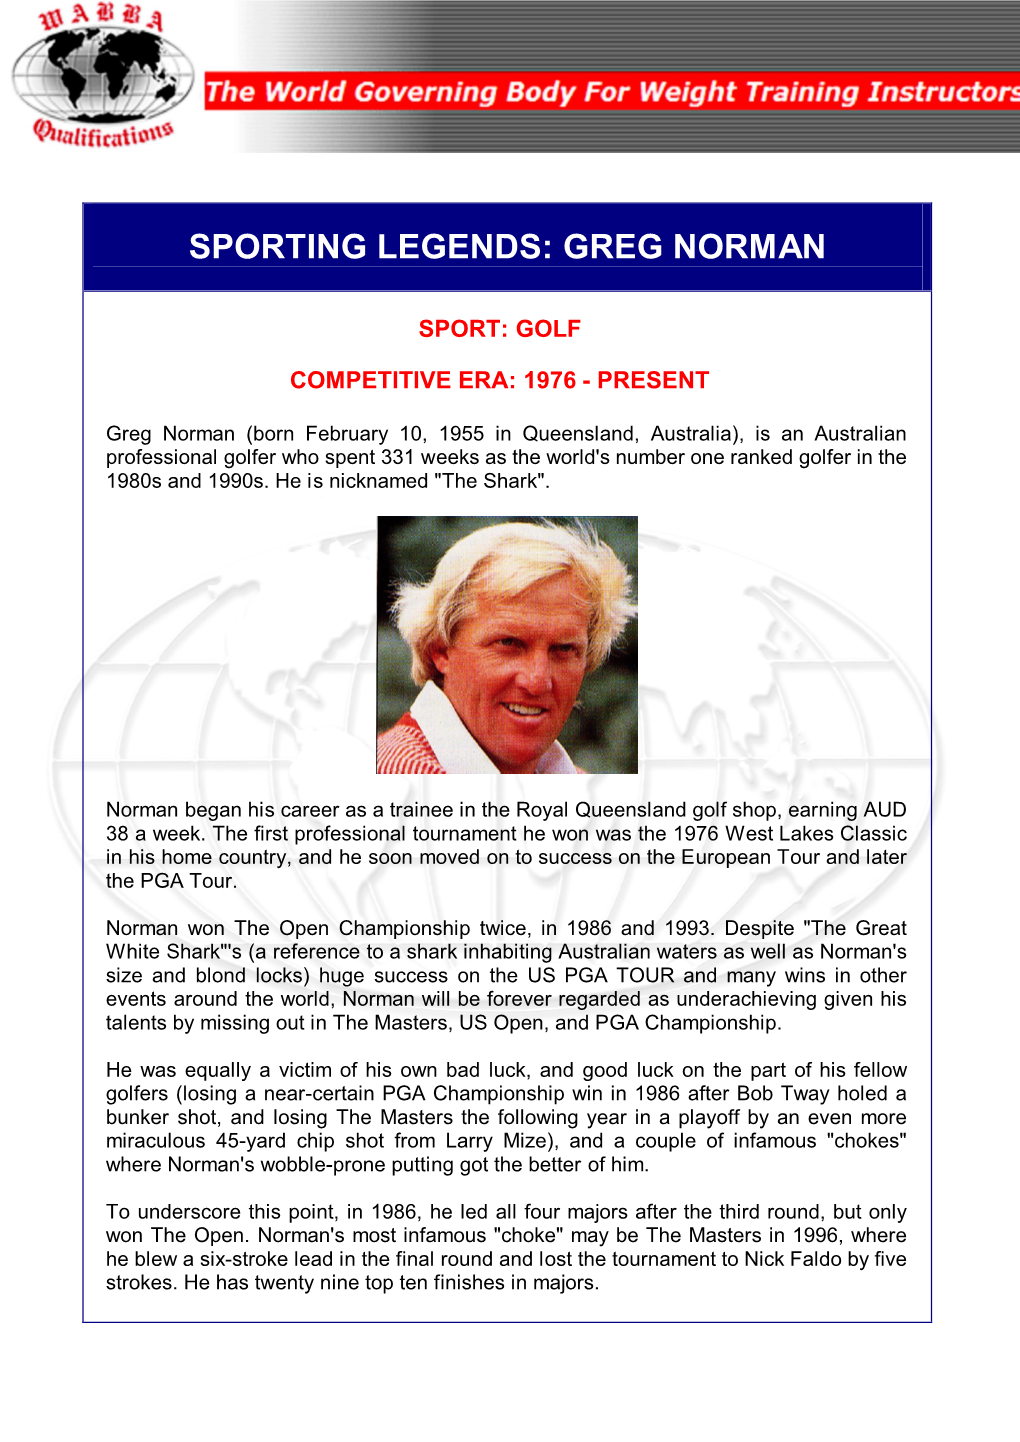 Sporting Legends: Greg Norman